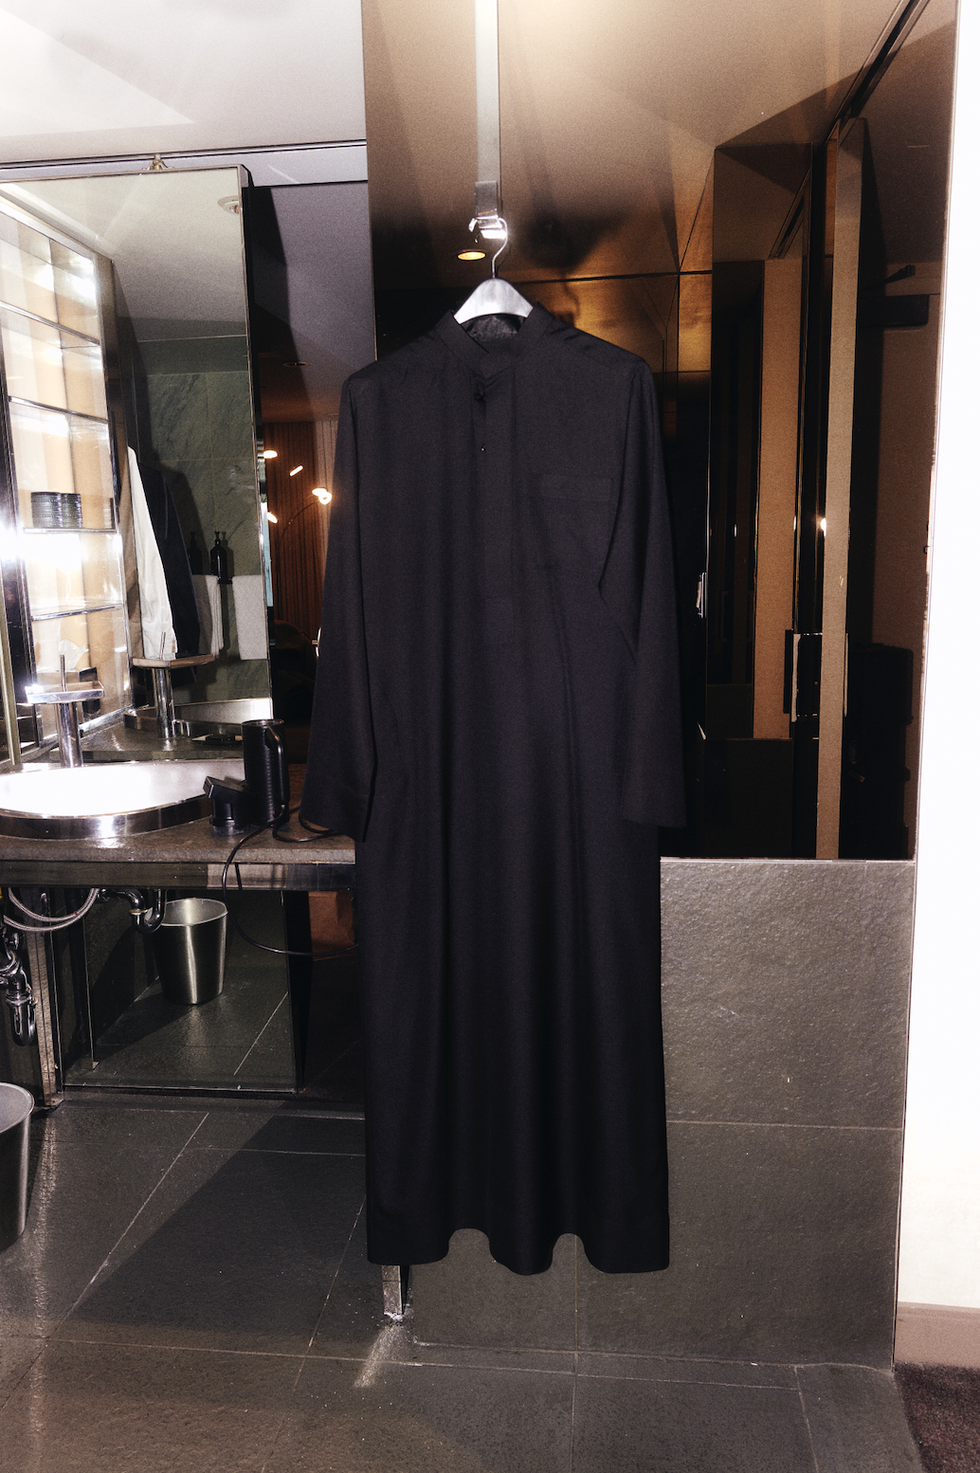 a black robe in a bathroom